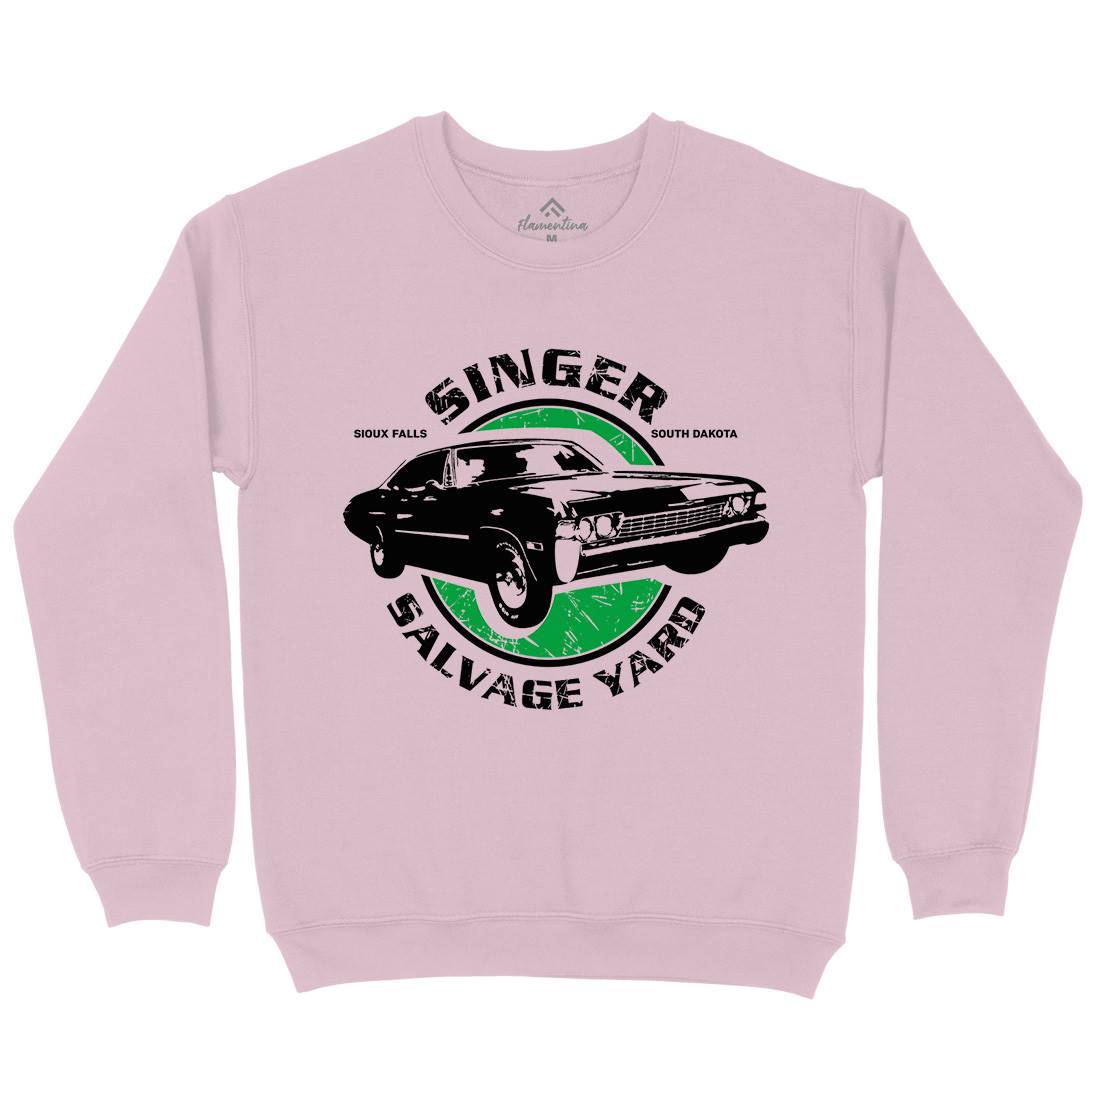 Singer Salvage Yard Kids Crew Neck Sweatshirt Cars D377